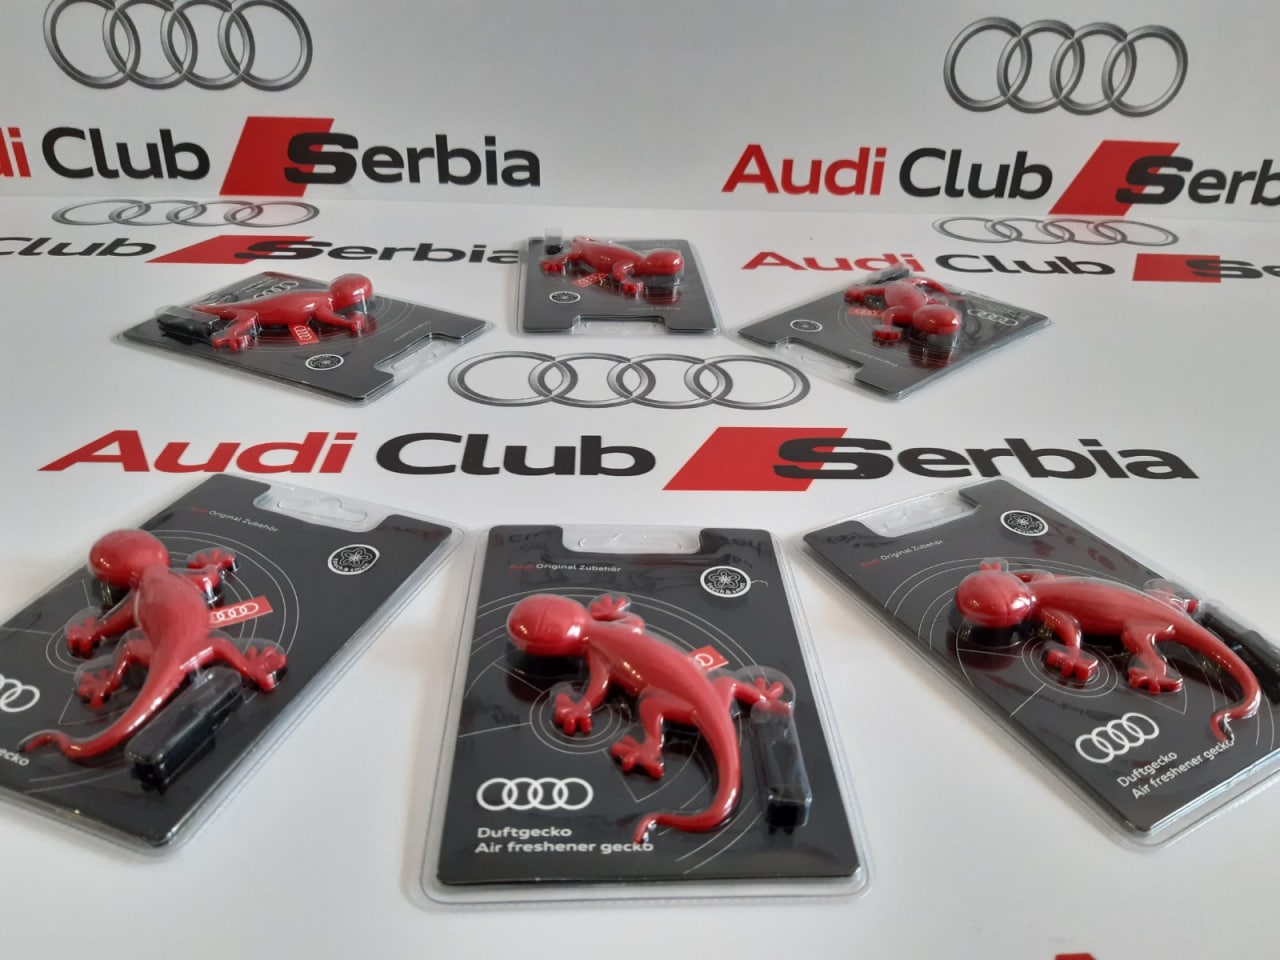 Audi Club Serbia - Audi Design Gecko OEM Limitirani metalni dekorativni Audi  Gecko NIJE MIRIS!  audi-gecko-design/ #audi #design #gecko #oem #audidesign #audigecko  #audigeckos #audigekon #audigeko